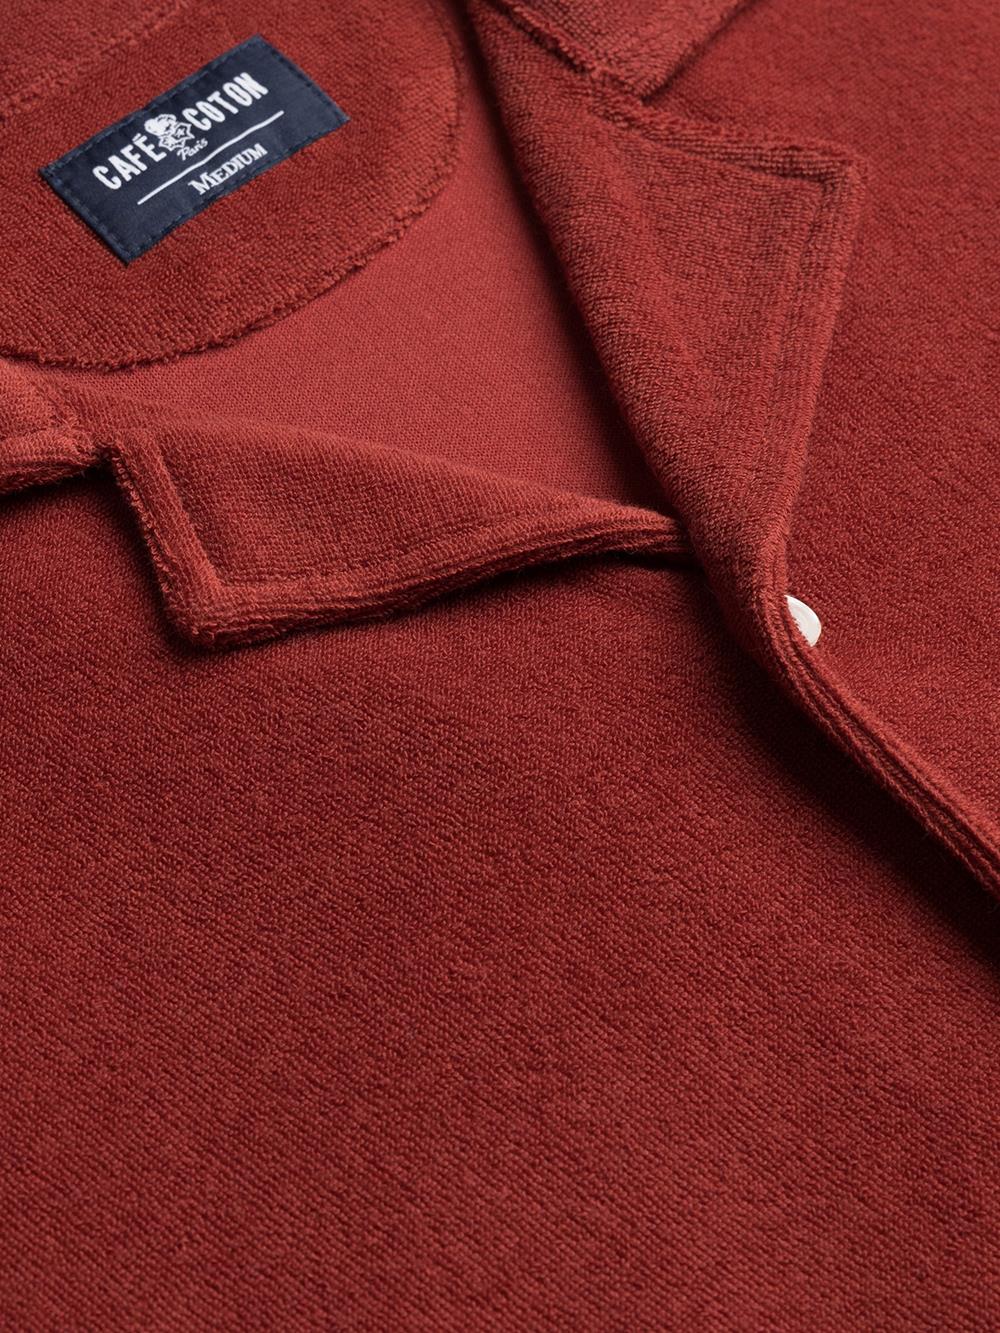 Camisa de rizo roja - Manga corta